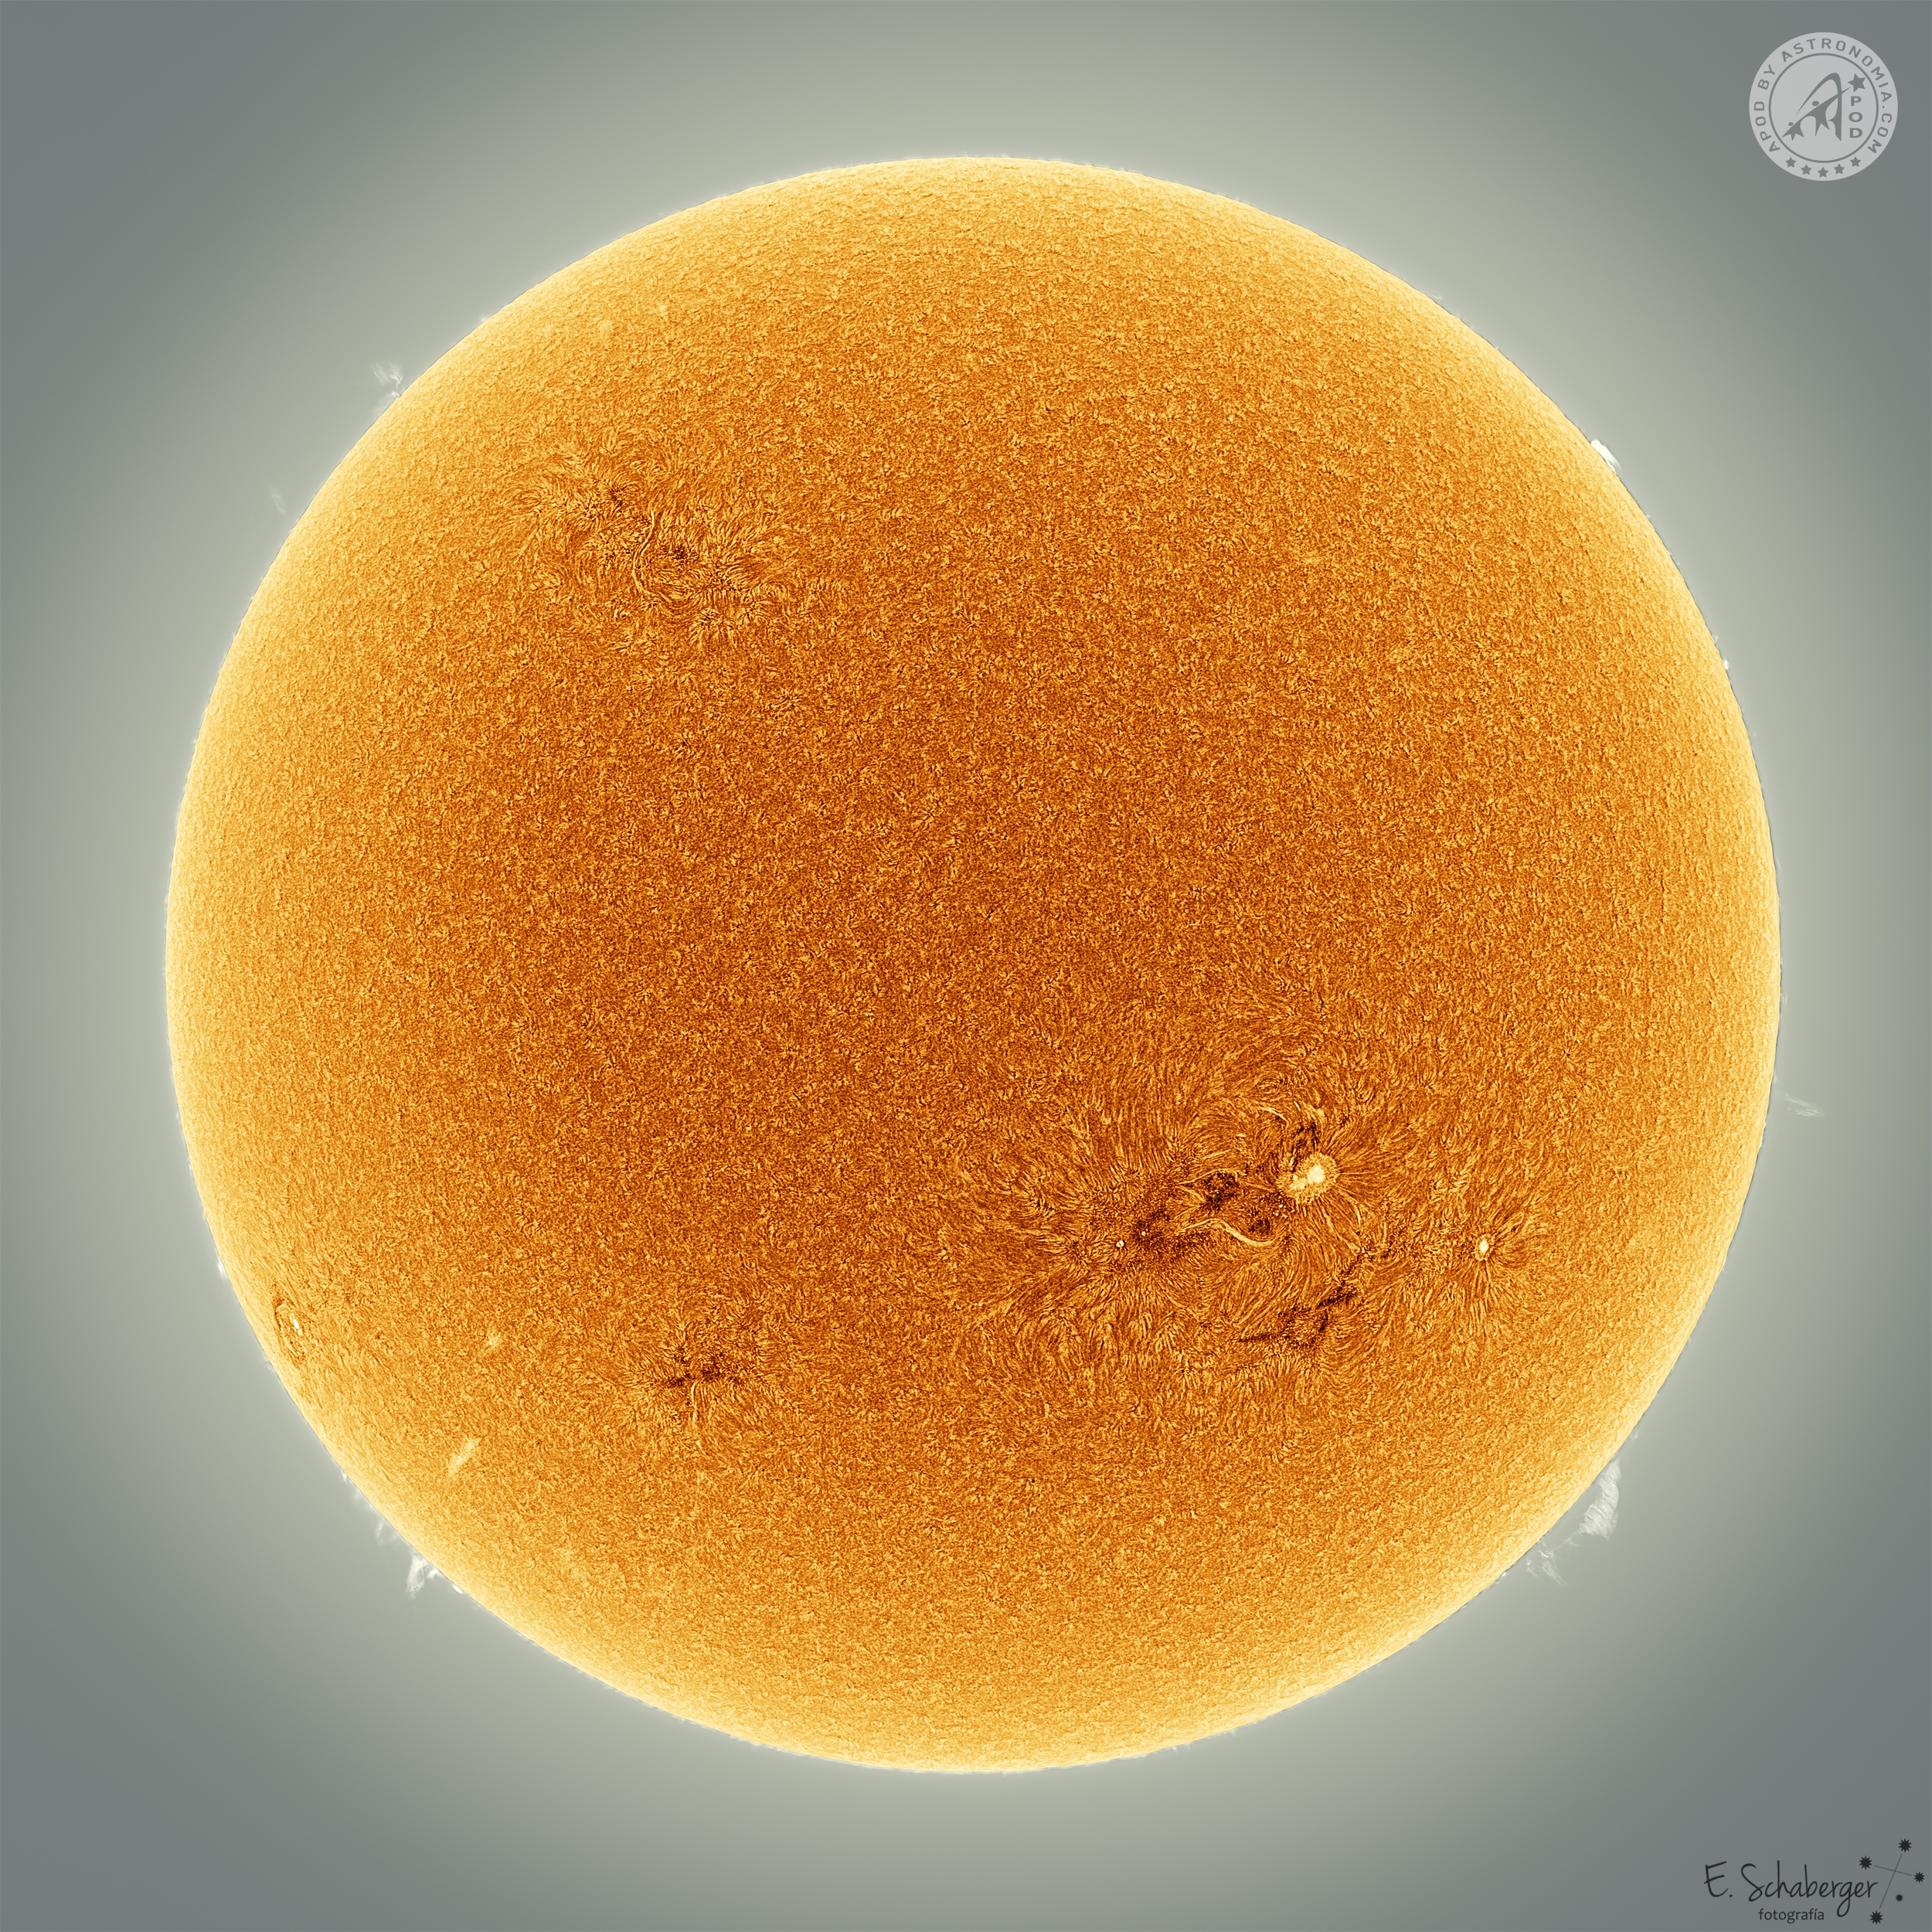 A Very Active Sun